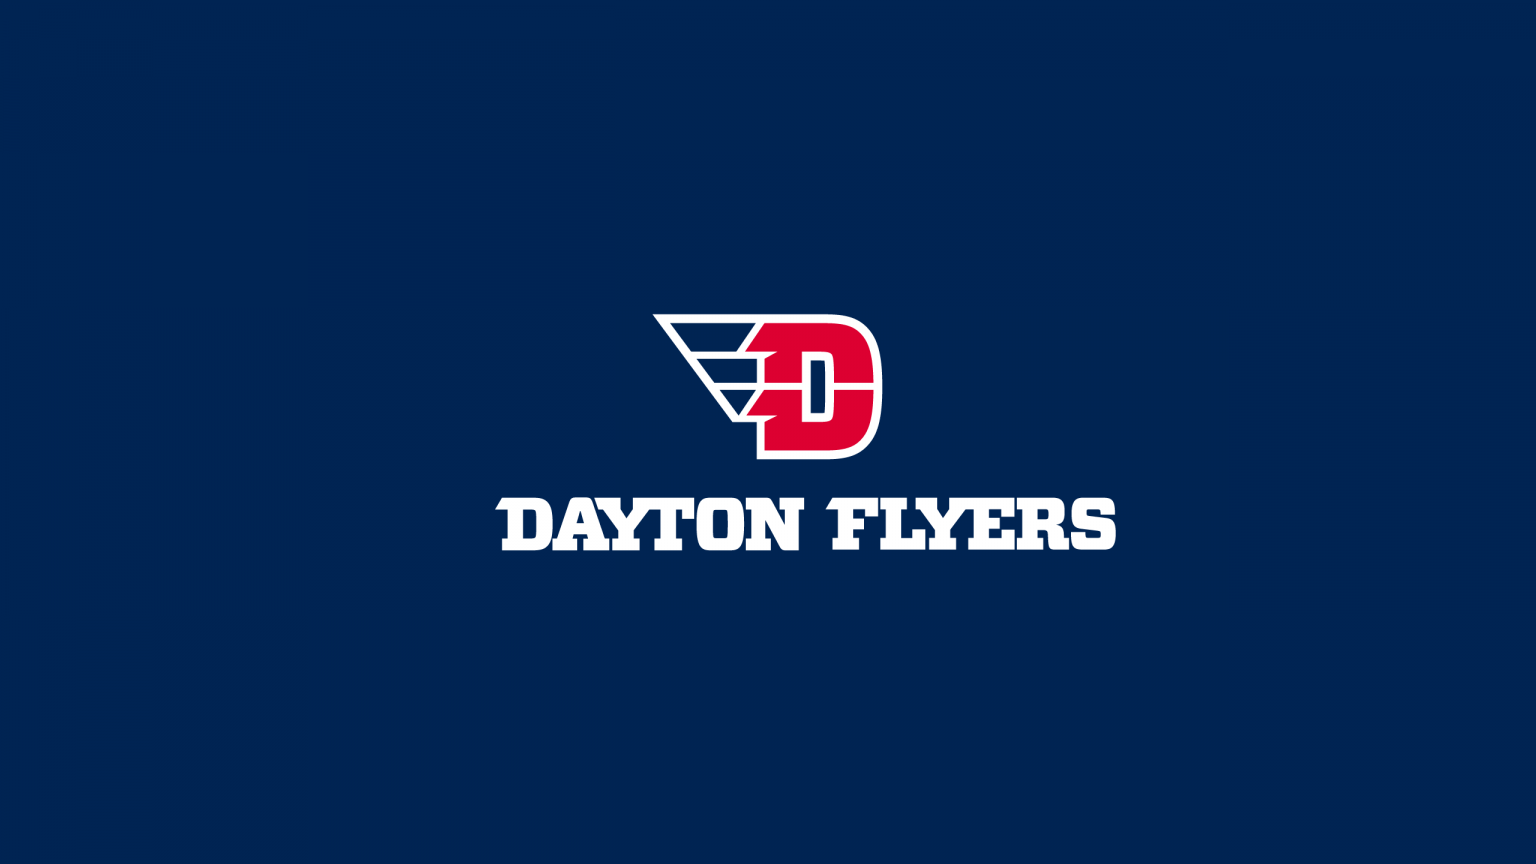 Dayton Flyers Basketball - NCAAB - Square Bettor